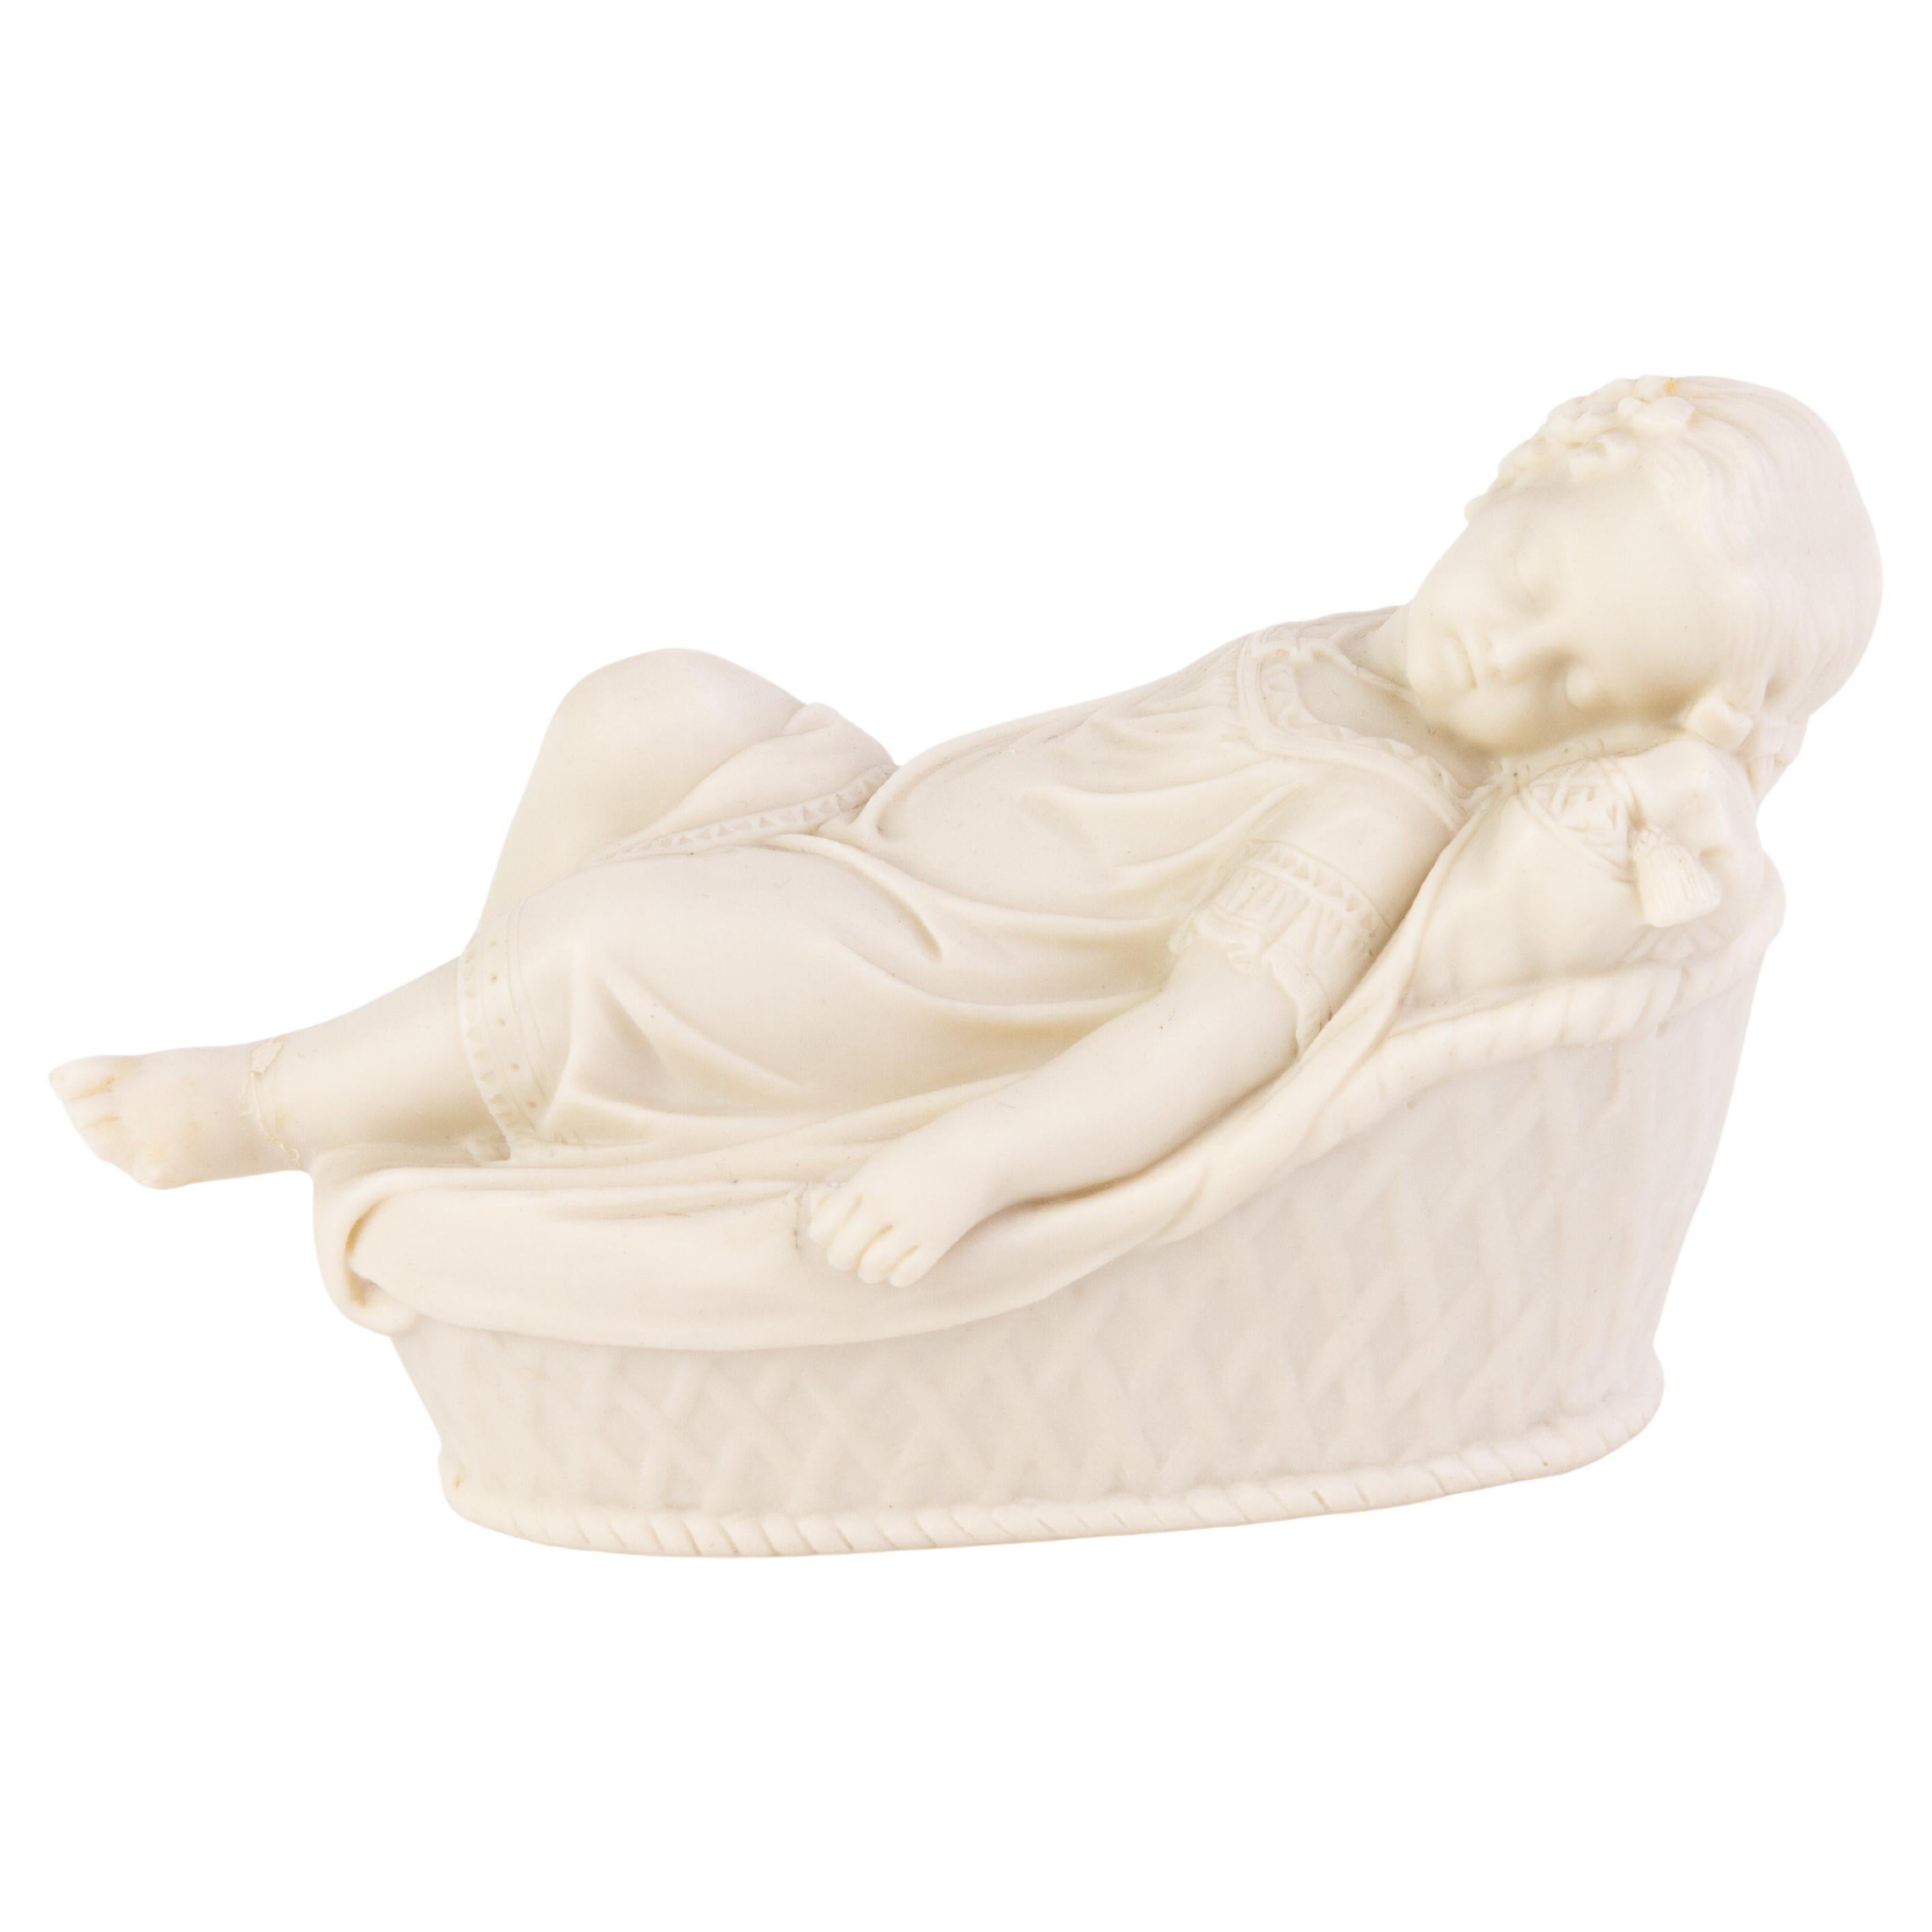 Victorian English Copeland Parian Ware Sleeping Child Statue 19th Century For Sale